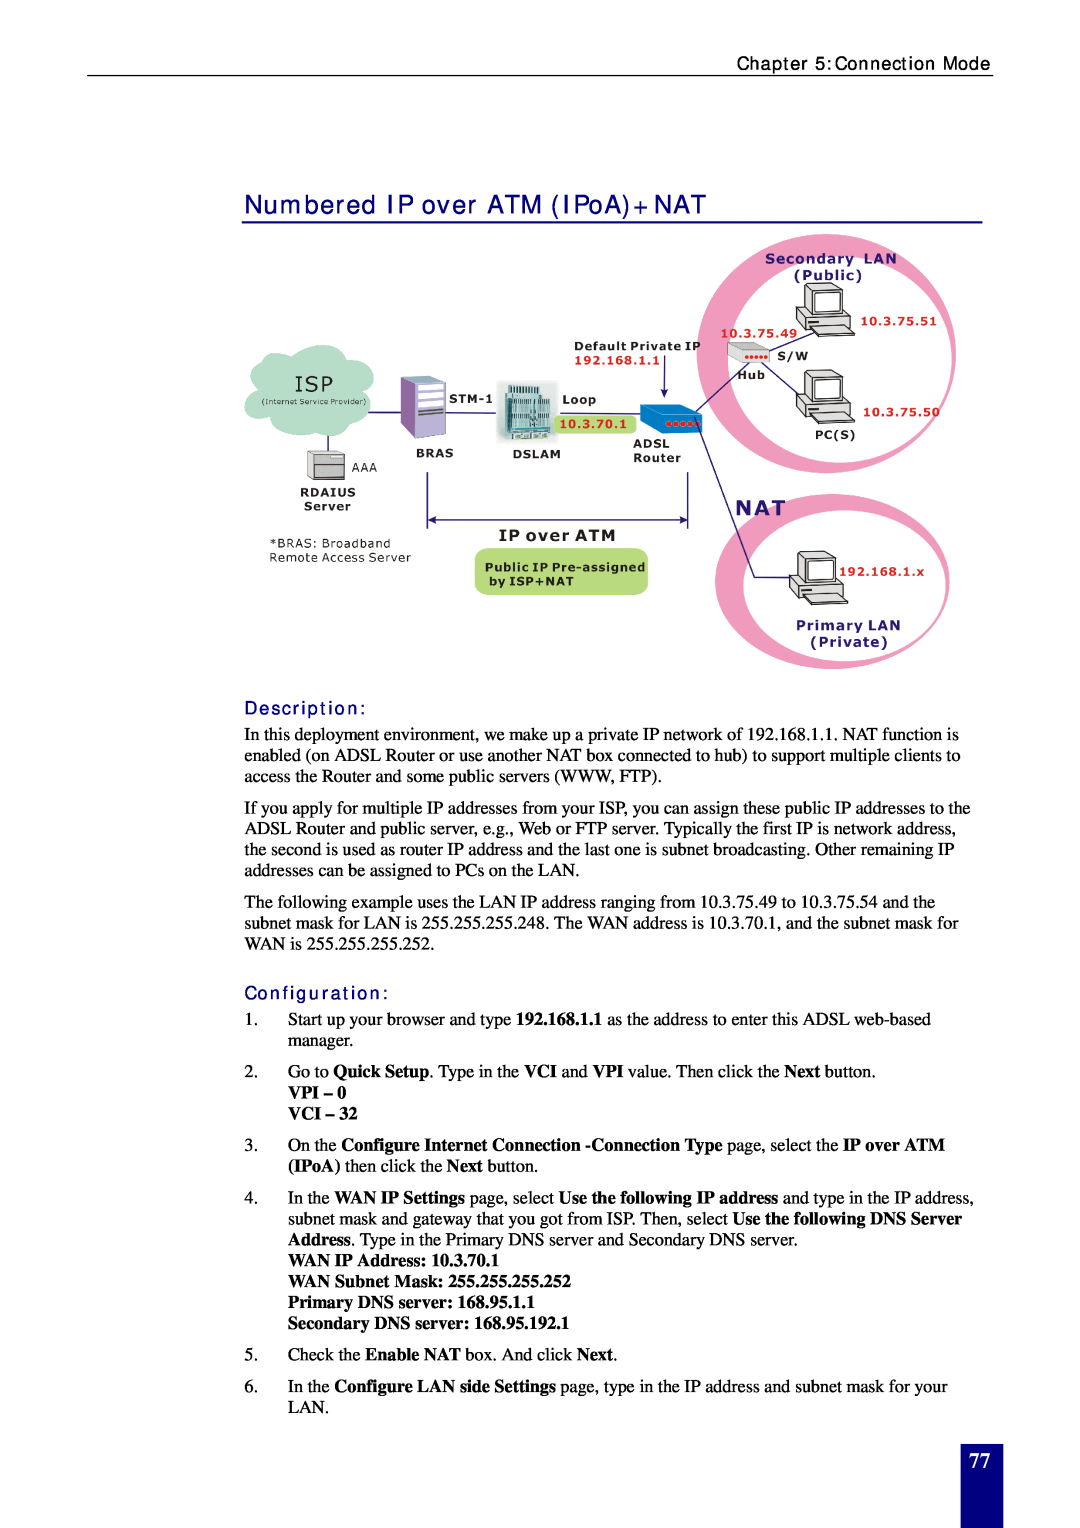 Dynalink RTA770W user manual Numbered IP over ATM IPoA+NAT, Description, Configuration, VPI - 0 VCI, Secondary DNS server 